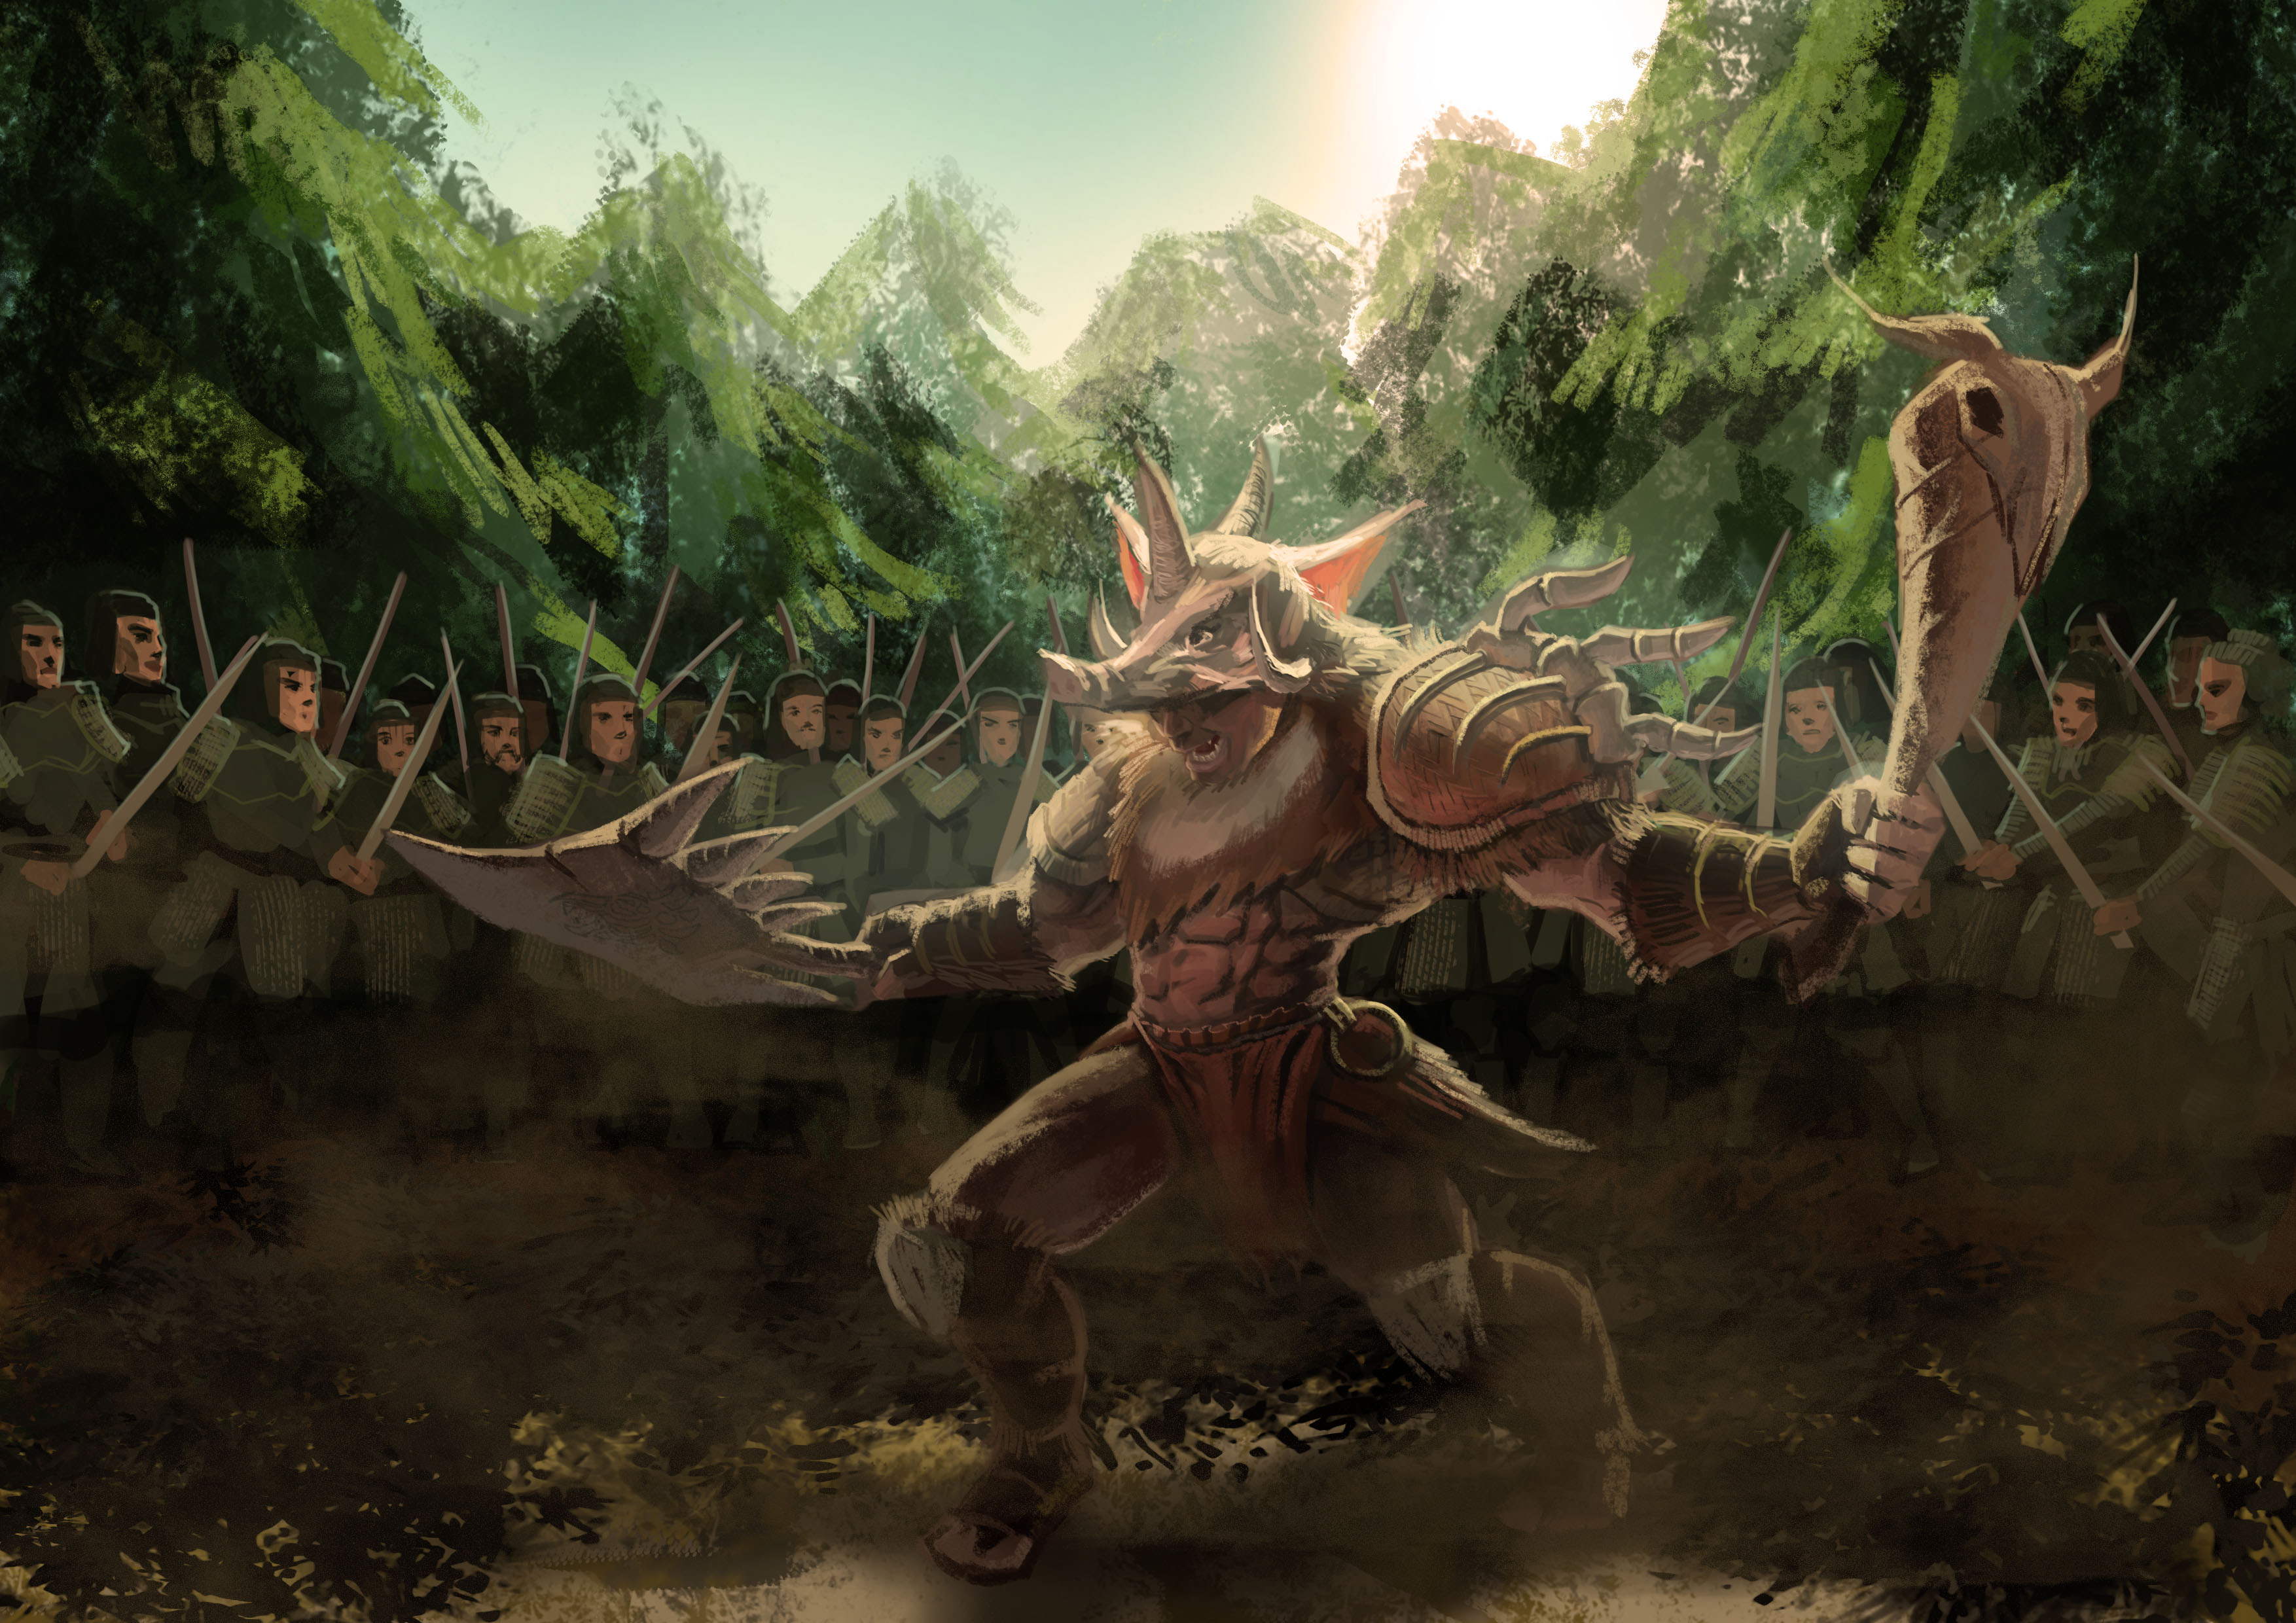 Warrior Soldier Fantasy Art Horns Sword Trees Clubs Boars Fighting Muscular Muscles Fur Dust Battle  3508x2480